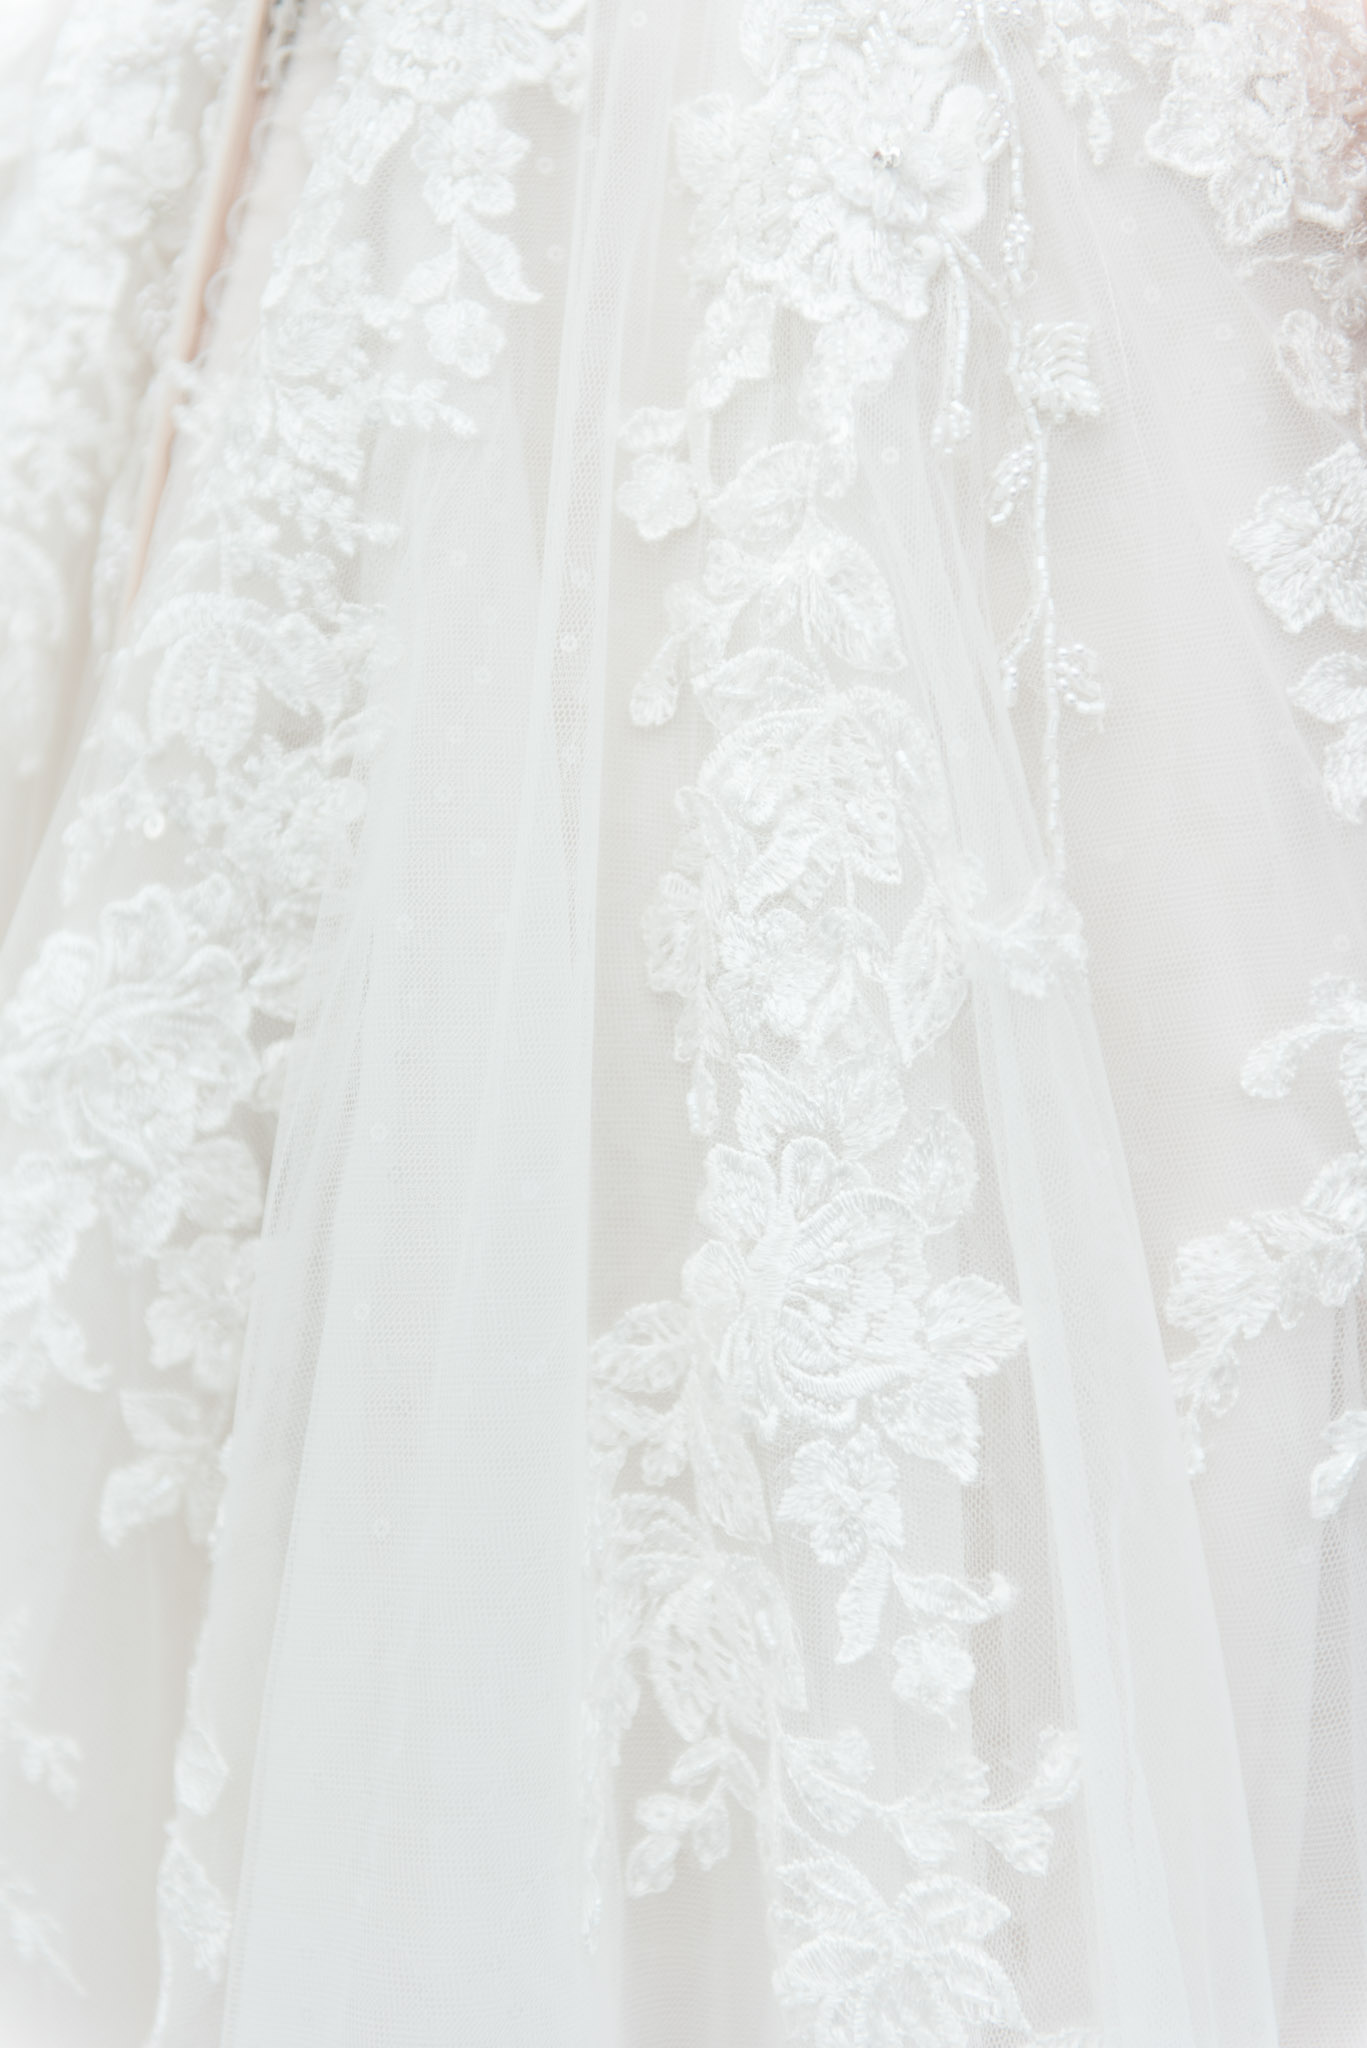 Lace on bride's wedding dress.